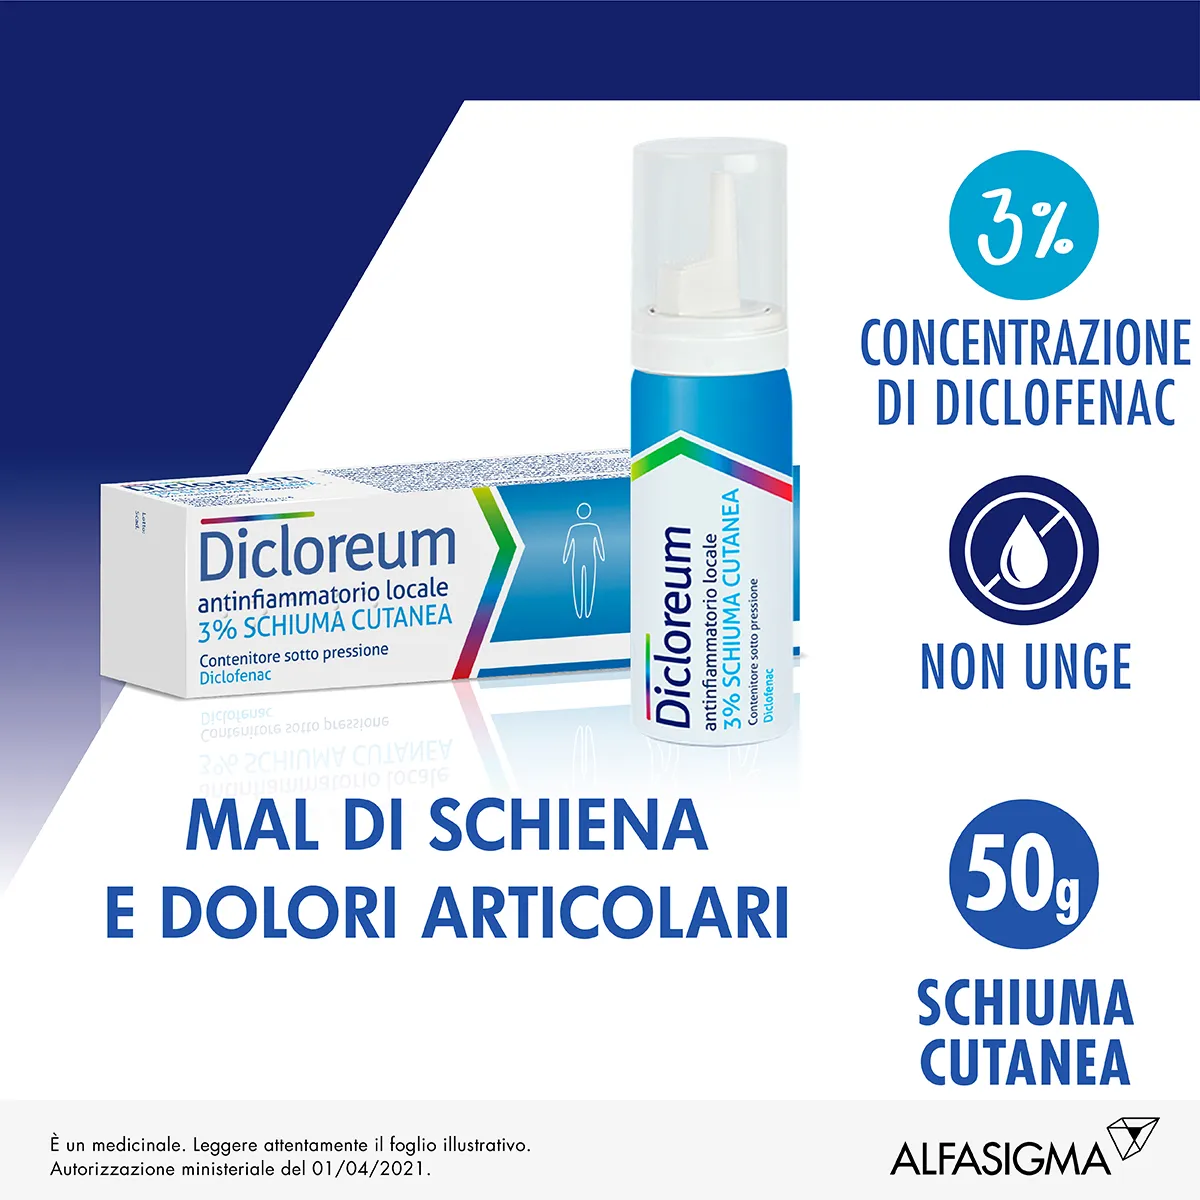 Dicloreum Antinfiammatorio Locale 3% Schiuma Cutanea 50 g